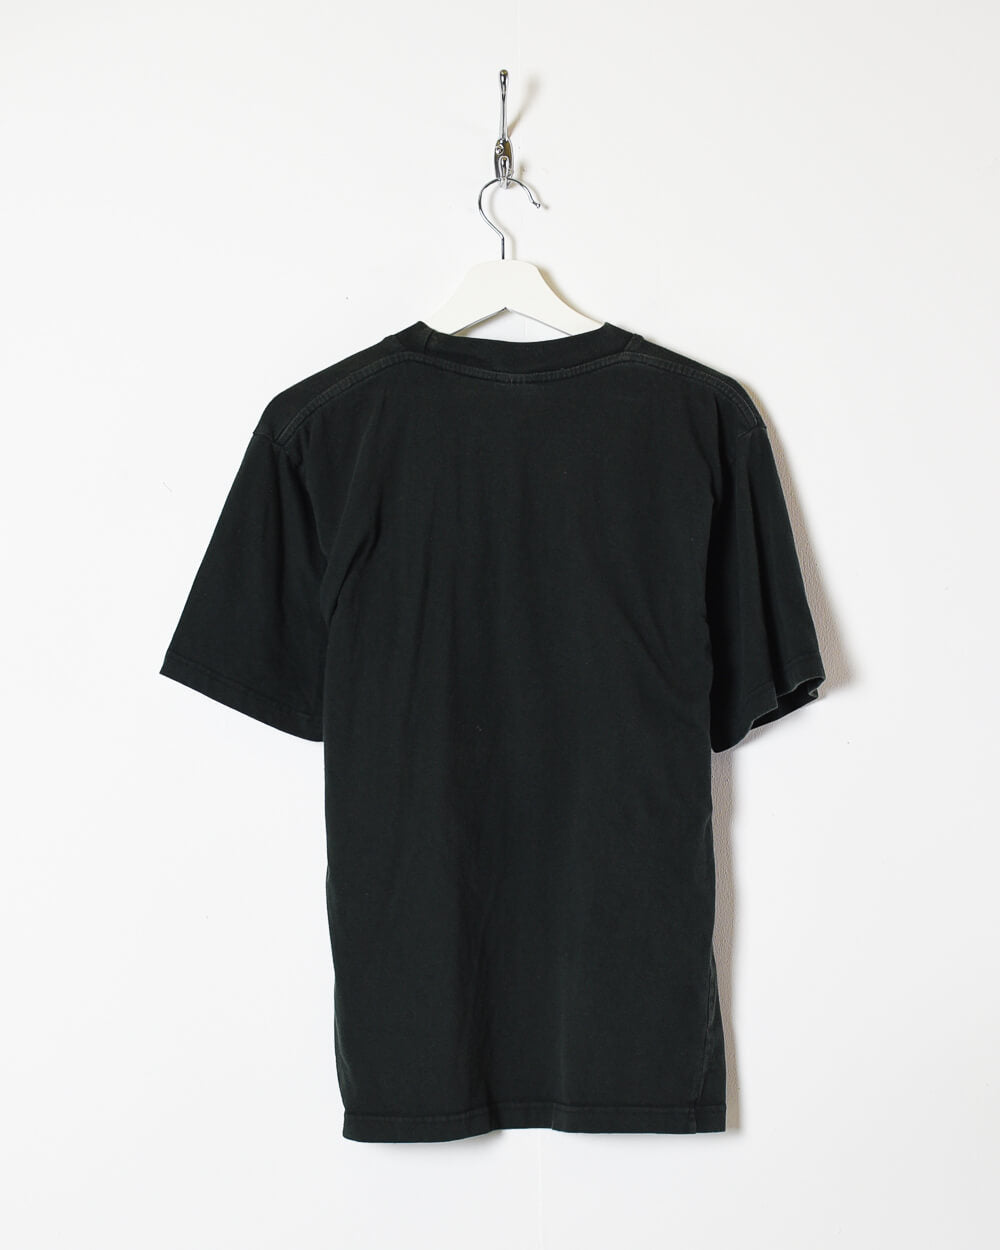 Black Nike T-Shirt - Small